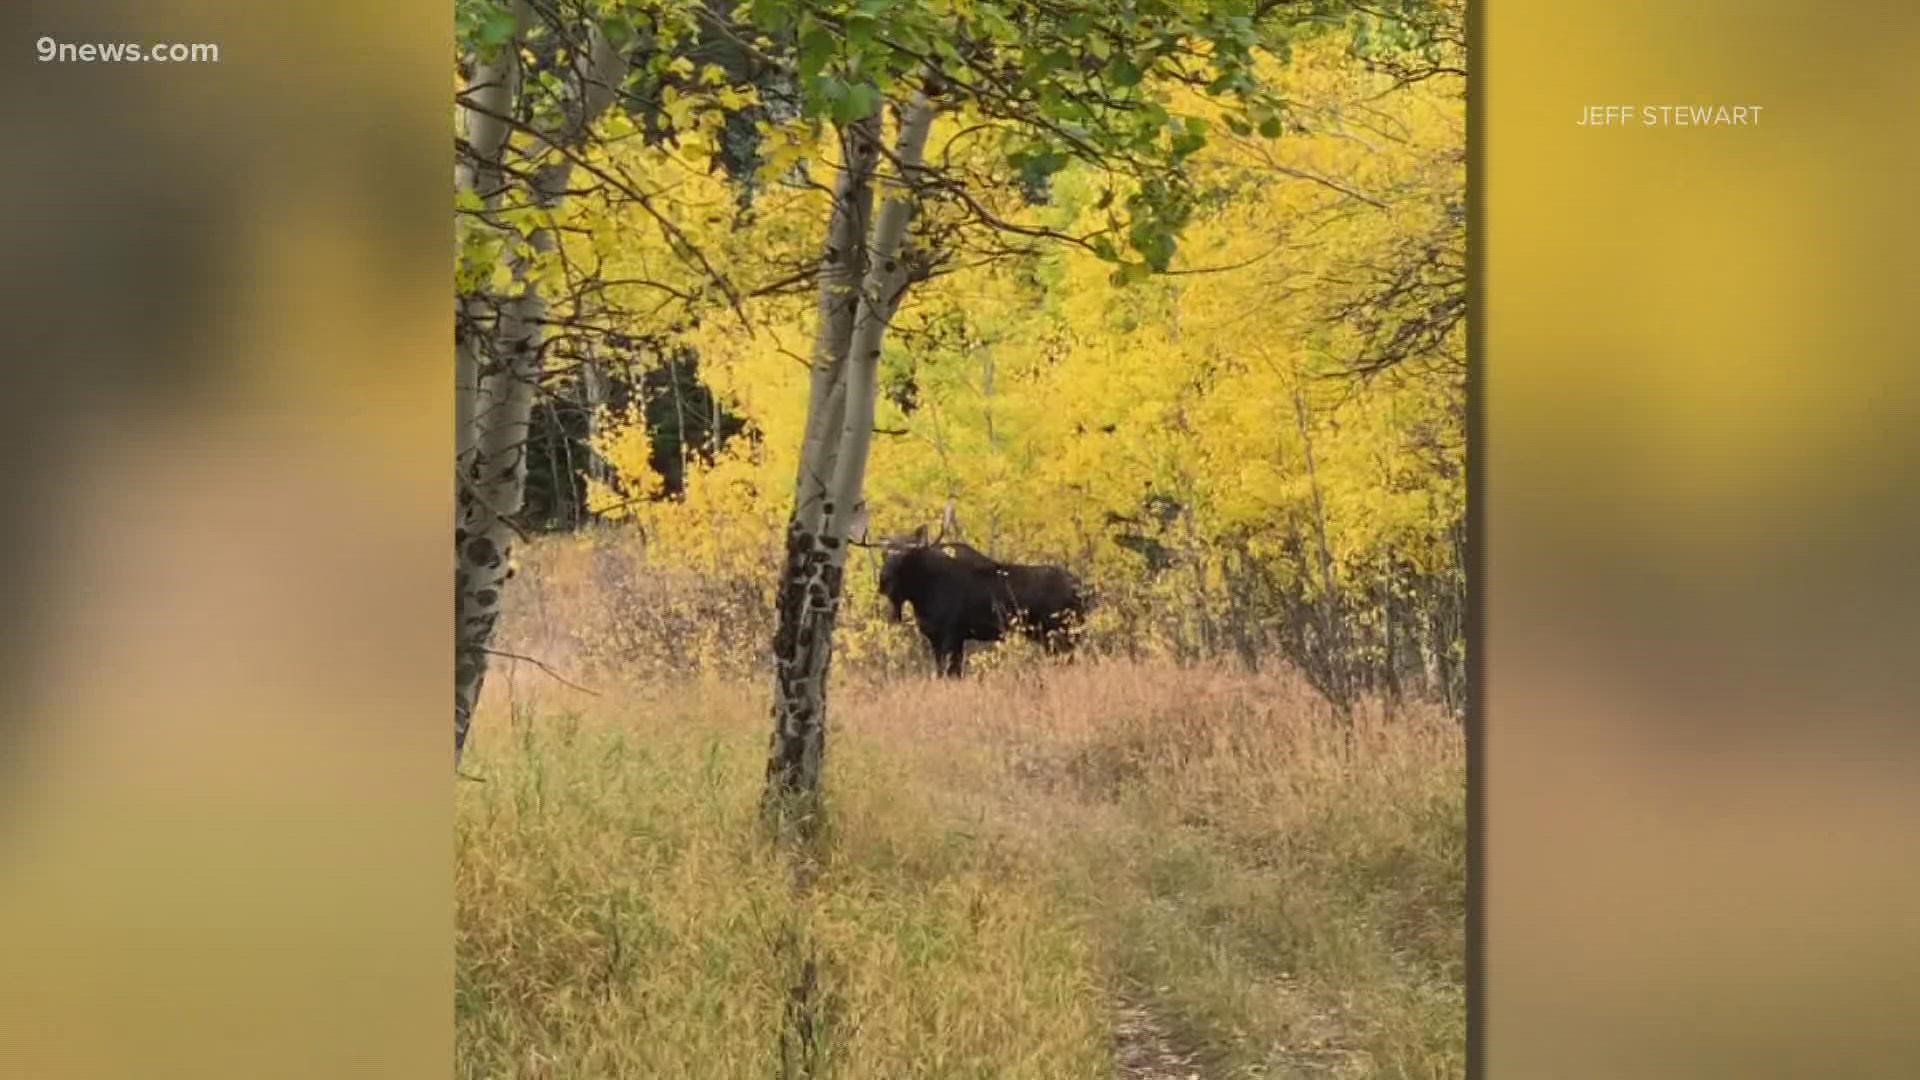 A moose near Nederland was enjoying some leaf-peeping!